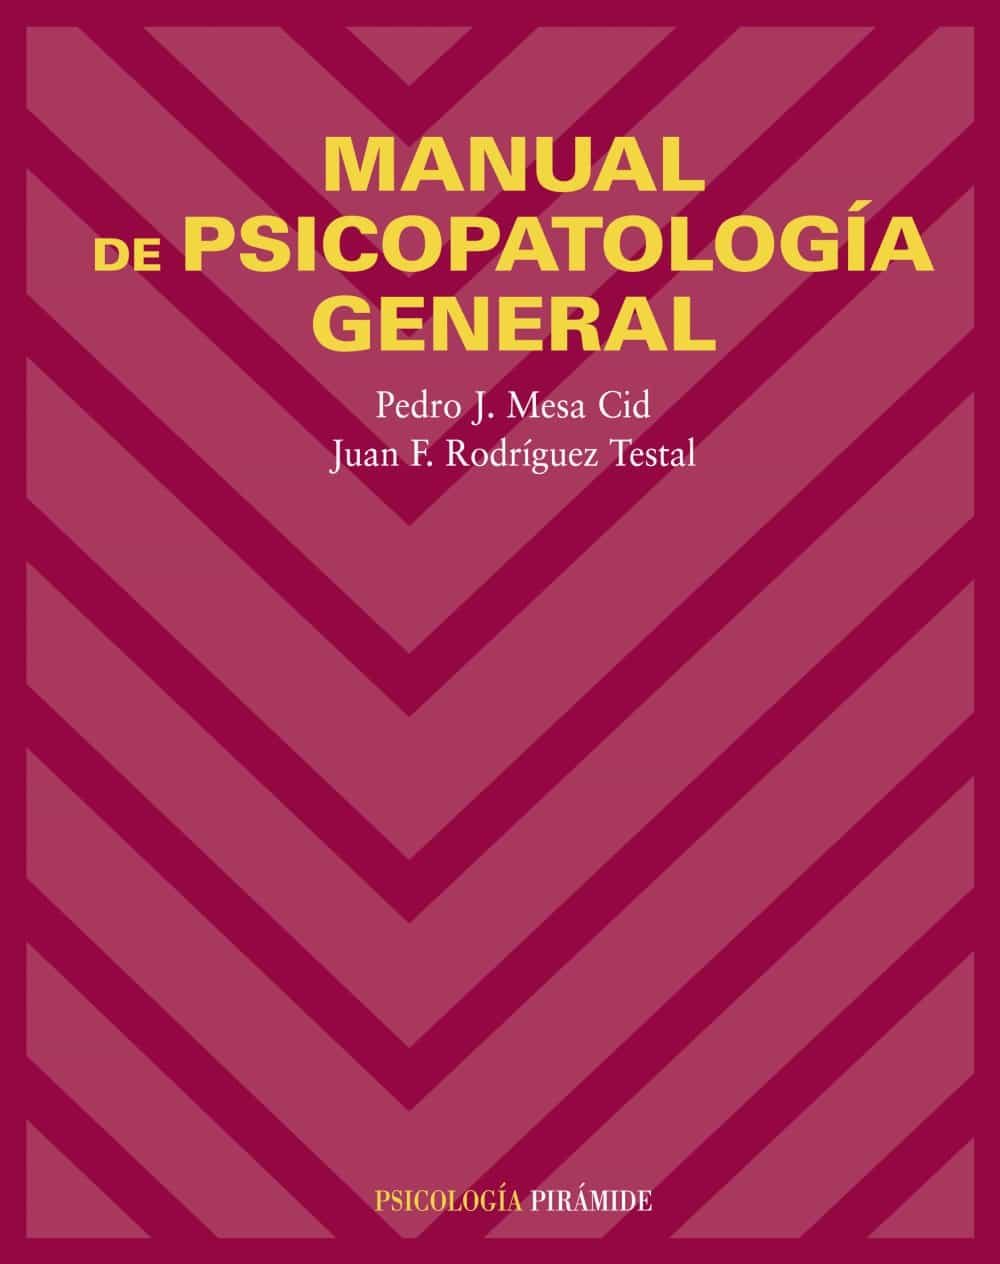 Manual de psicopatologia pdf belloch